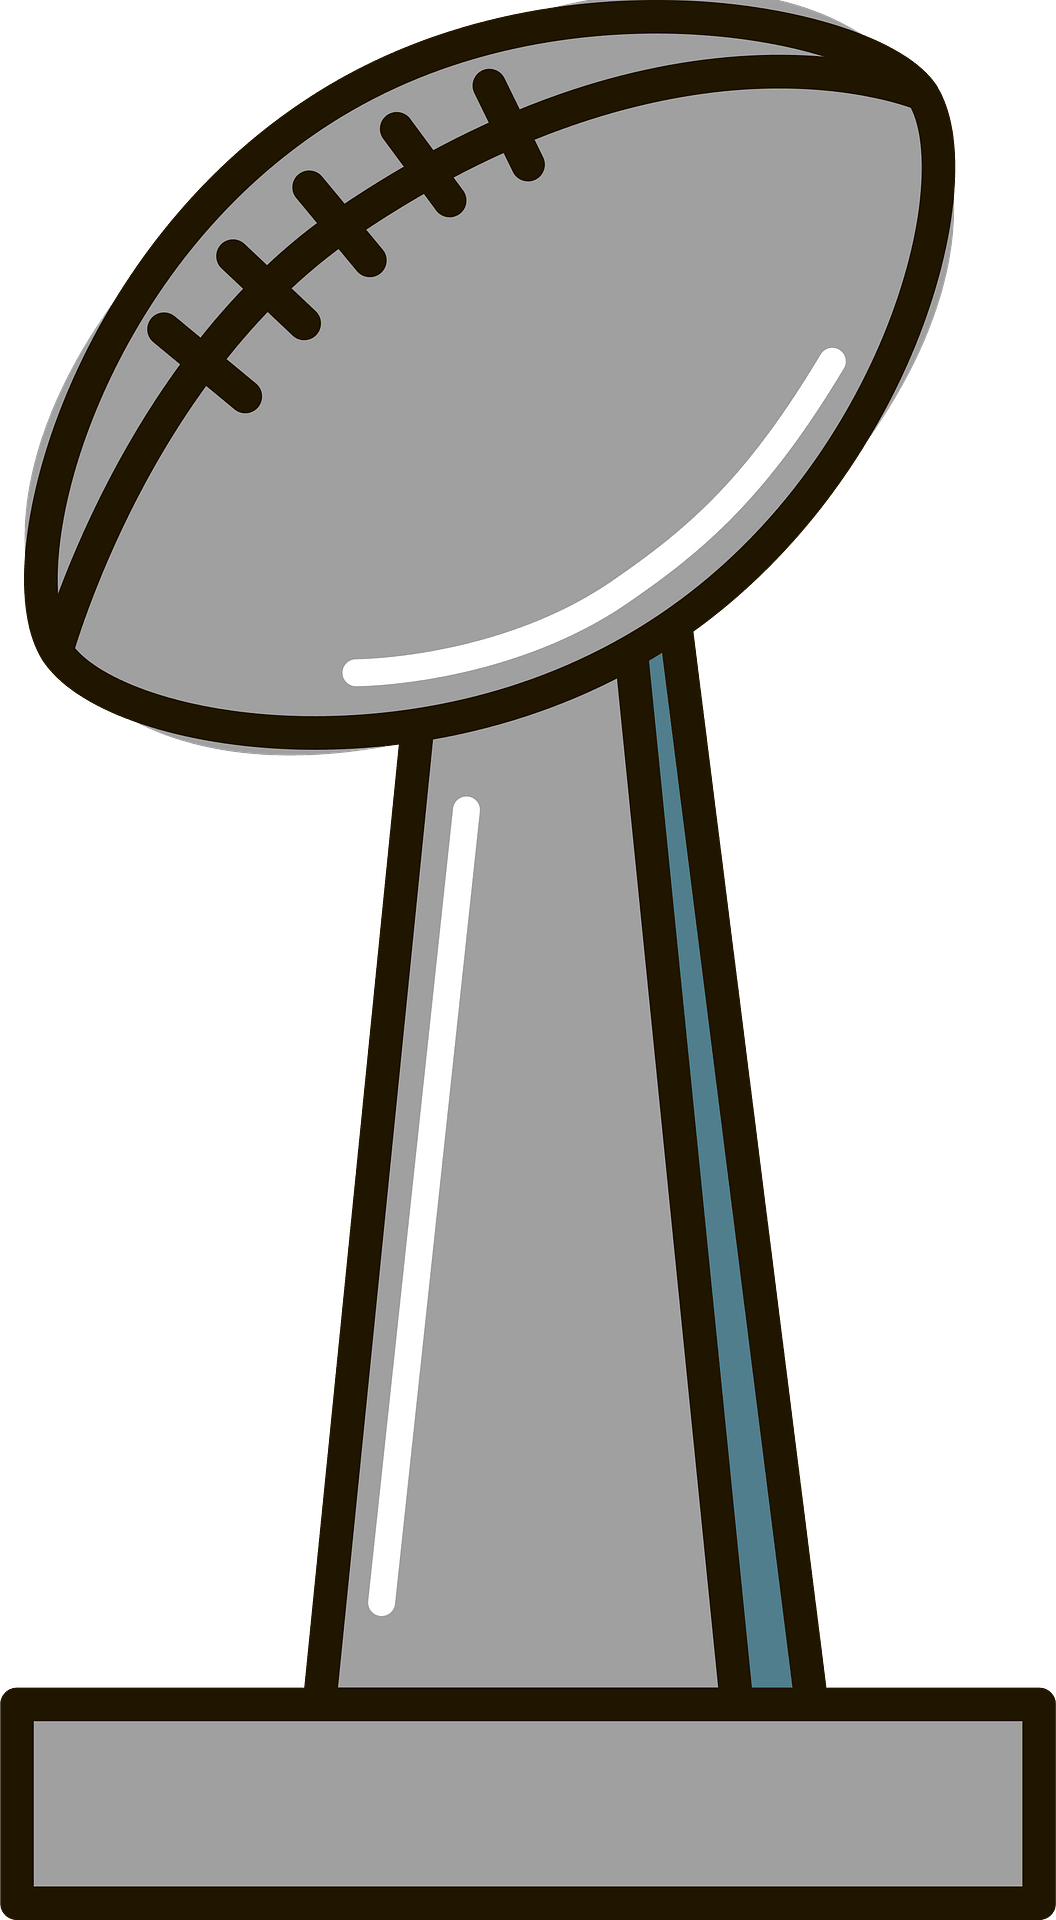 Super Bowl No Background Clip Art